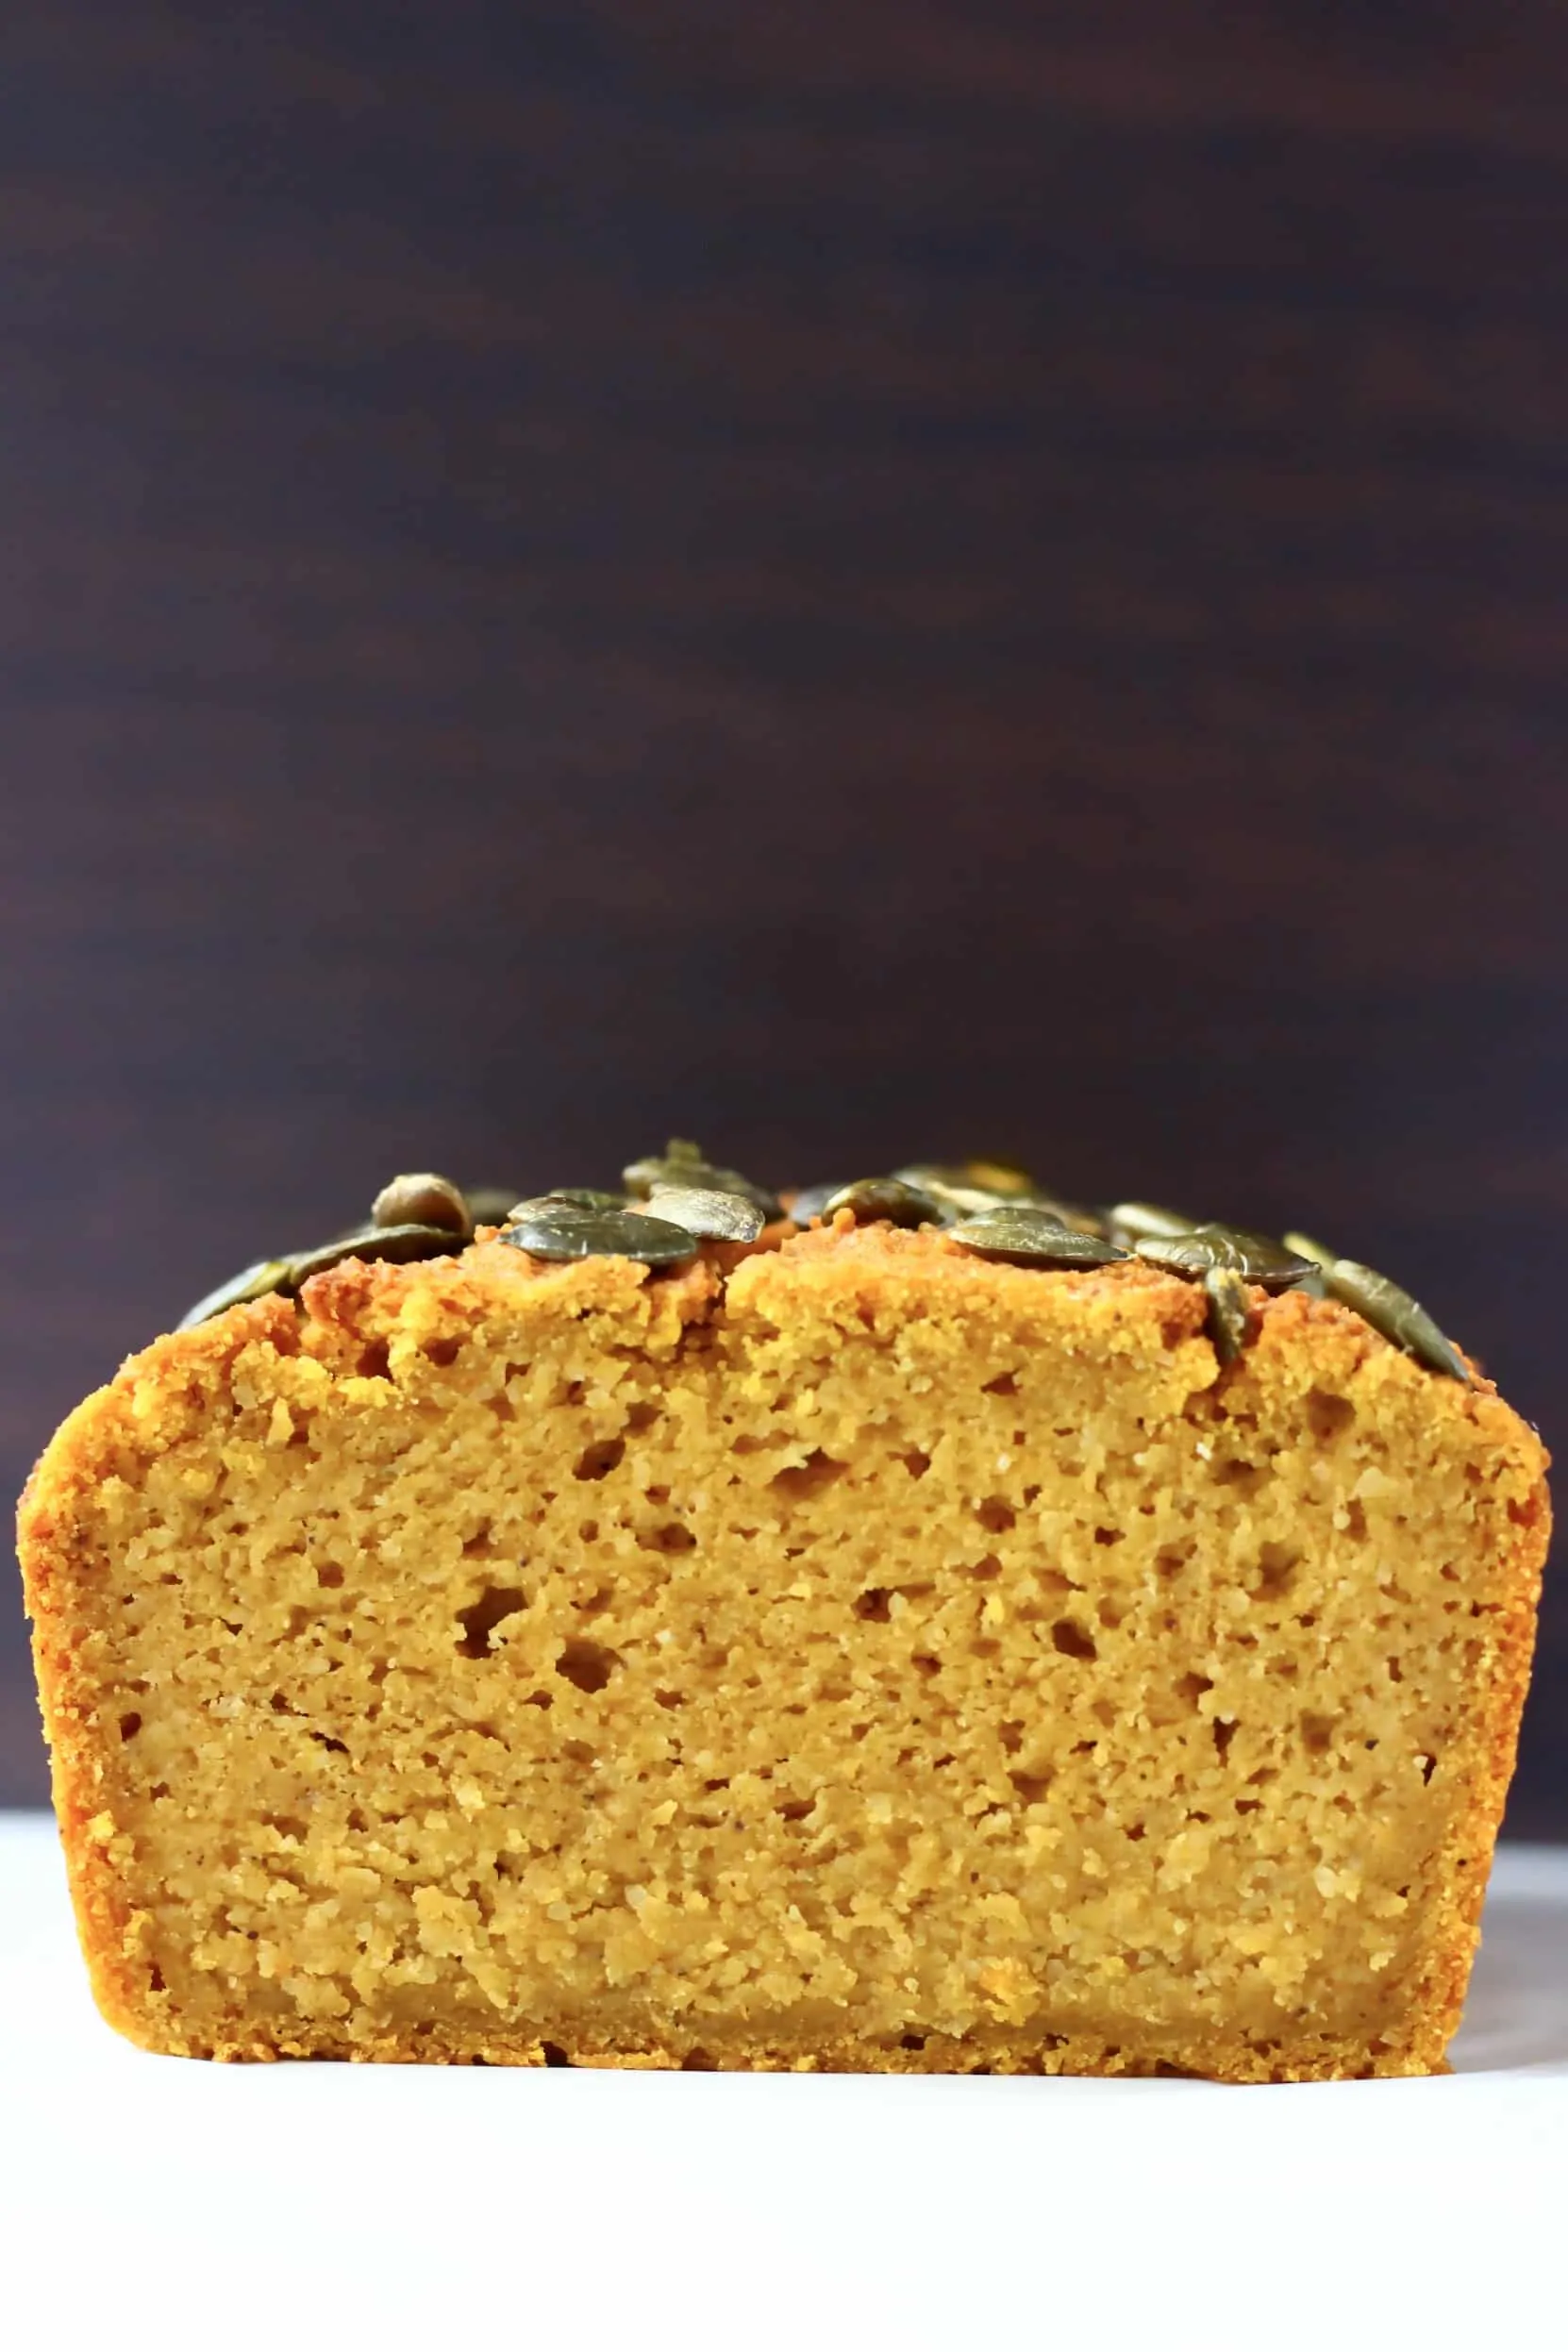 A sliced loaf of gluten-free vegan pumpkin bread